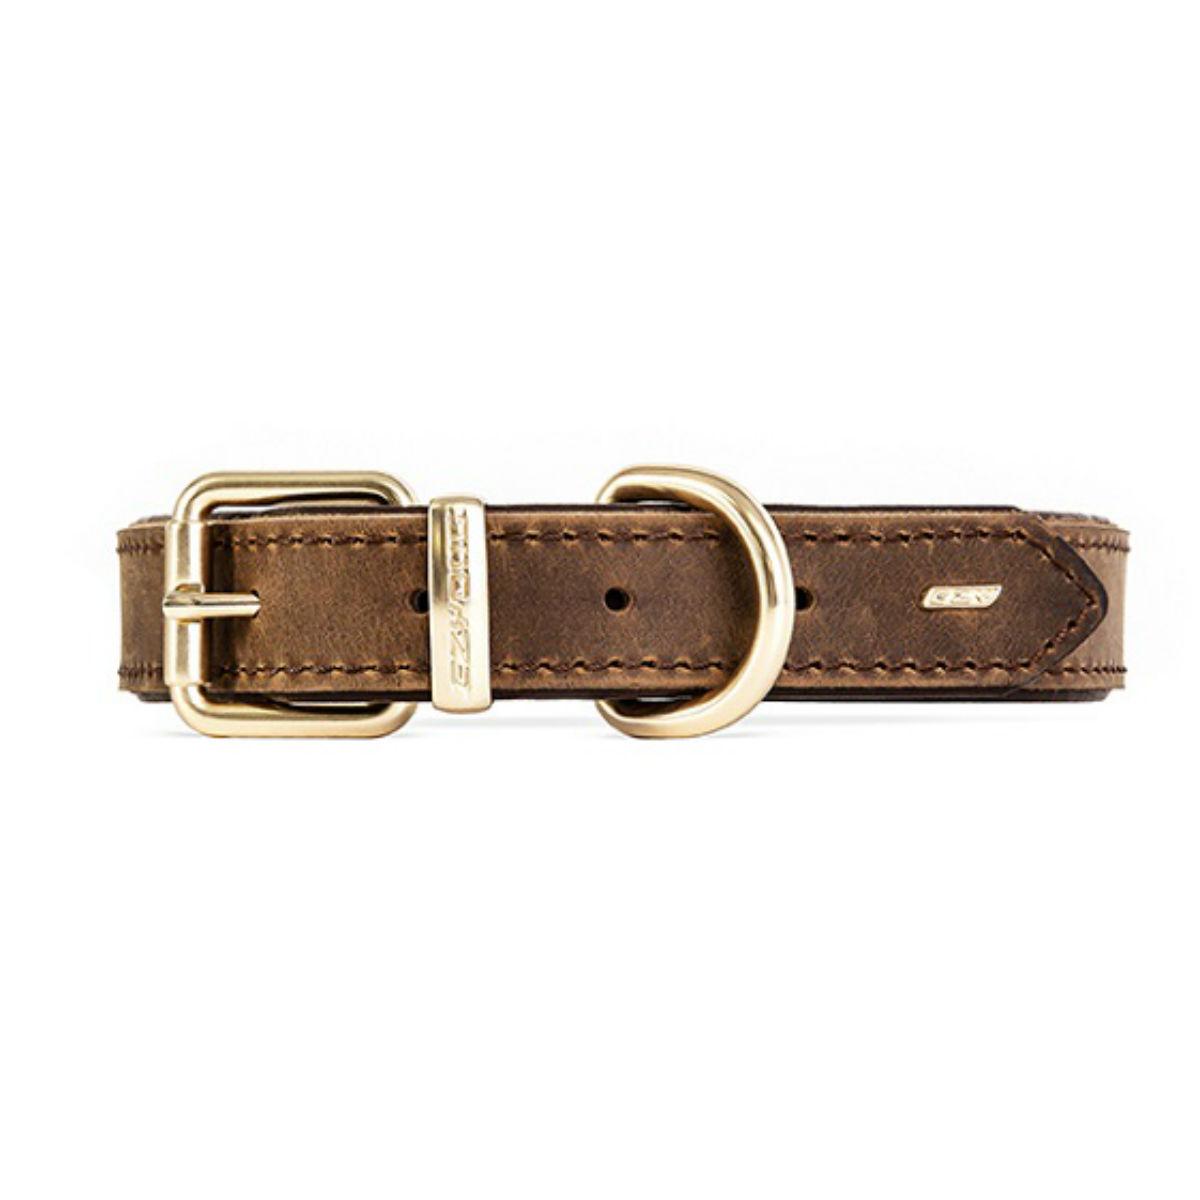 Oxford Brown Leather Dog Collar - Medium